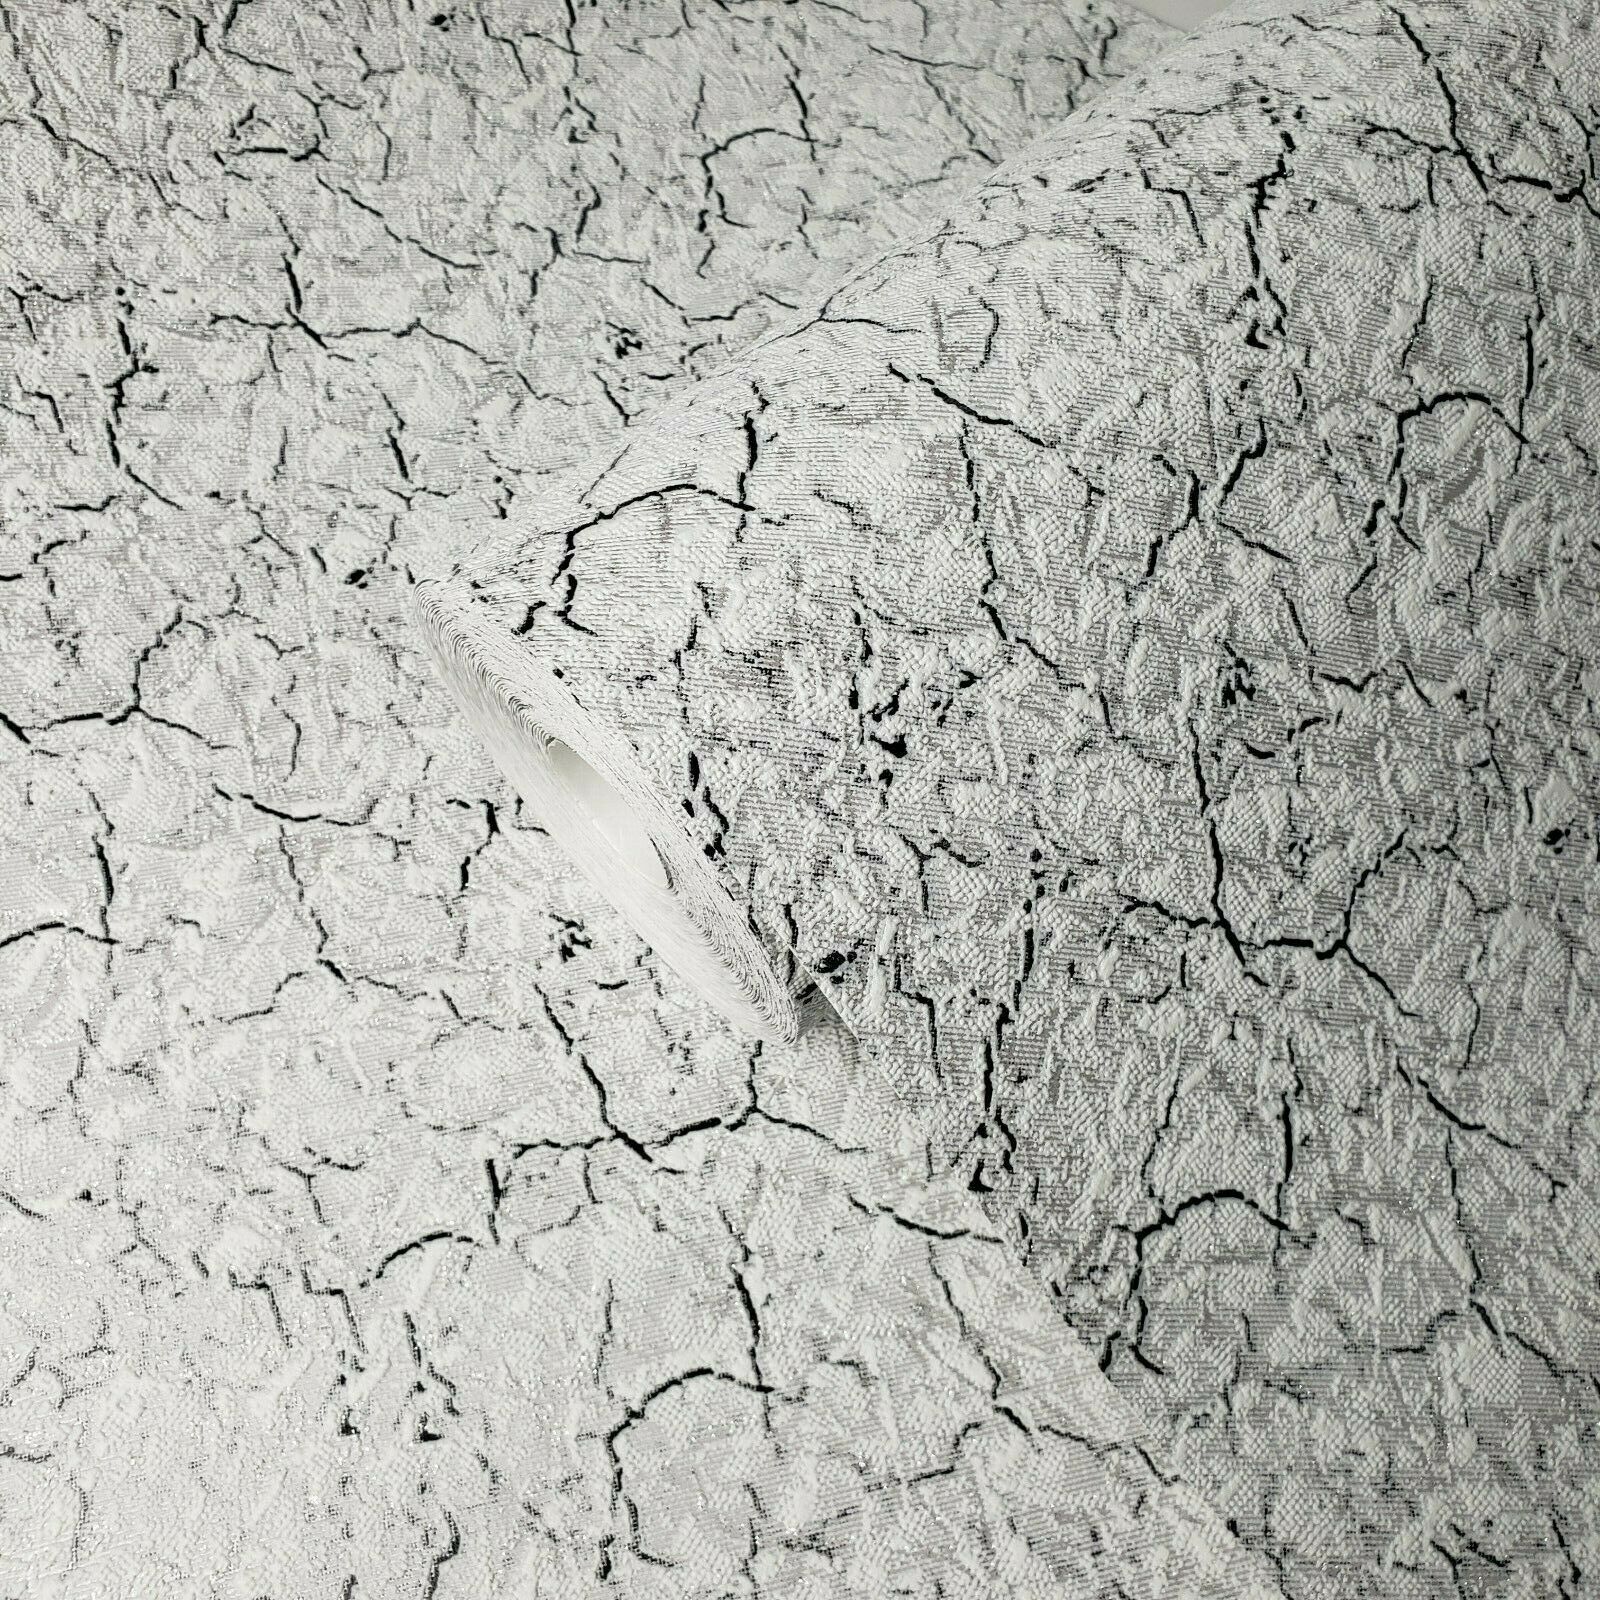 cracked wallpaper texture